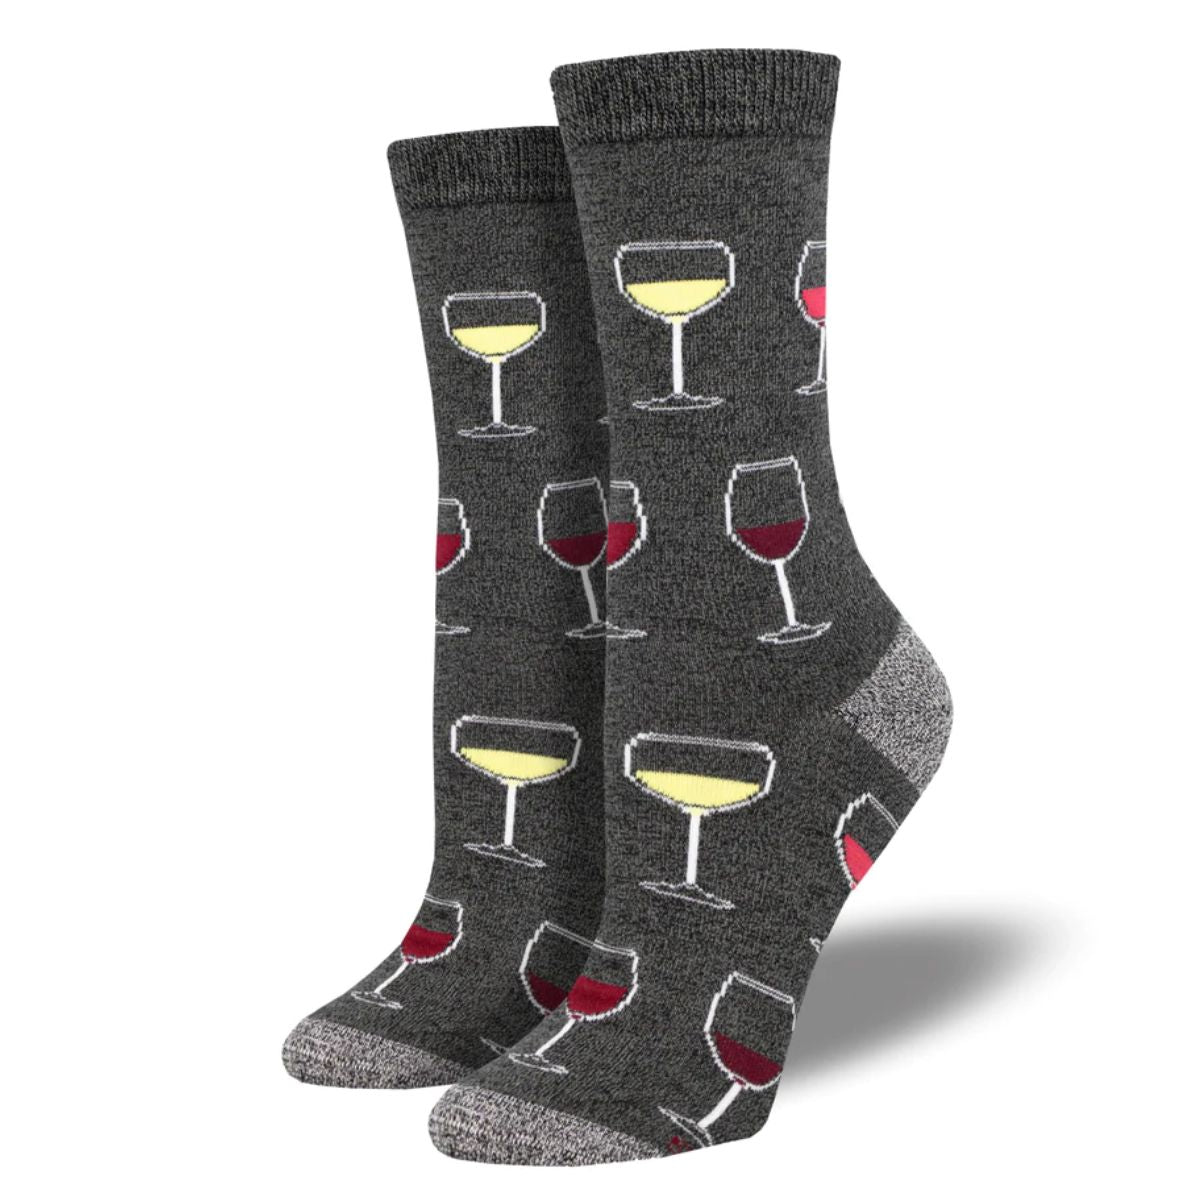 Sip sip hooray socks a pair of charcoal grey crew socks with wine glass print